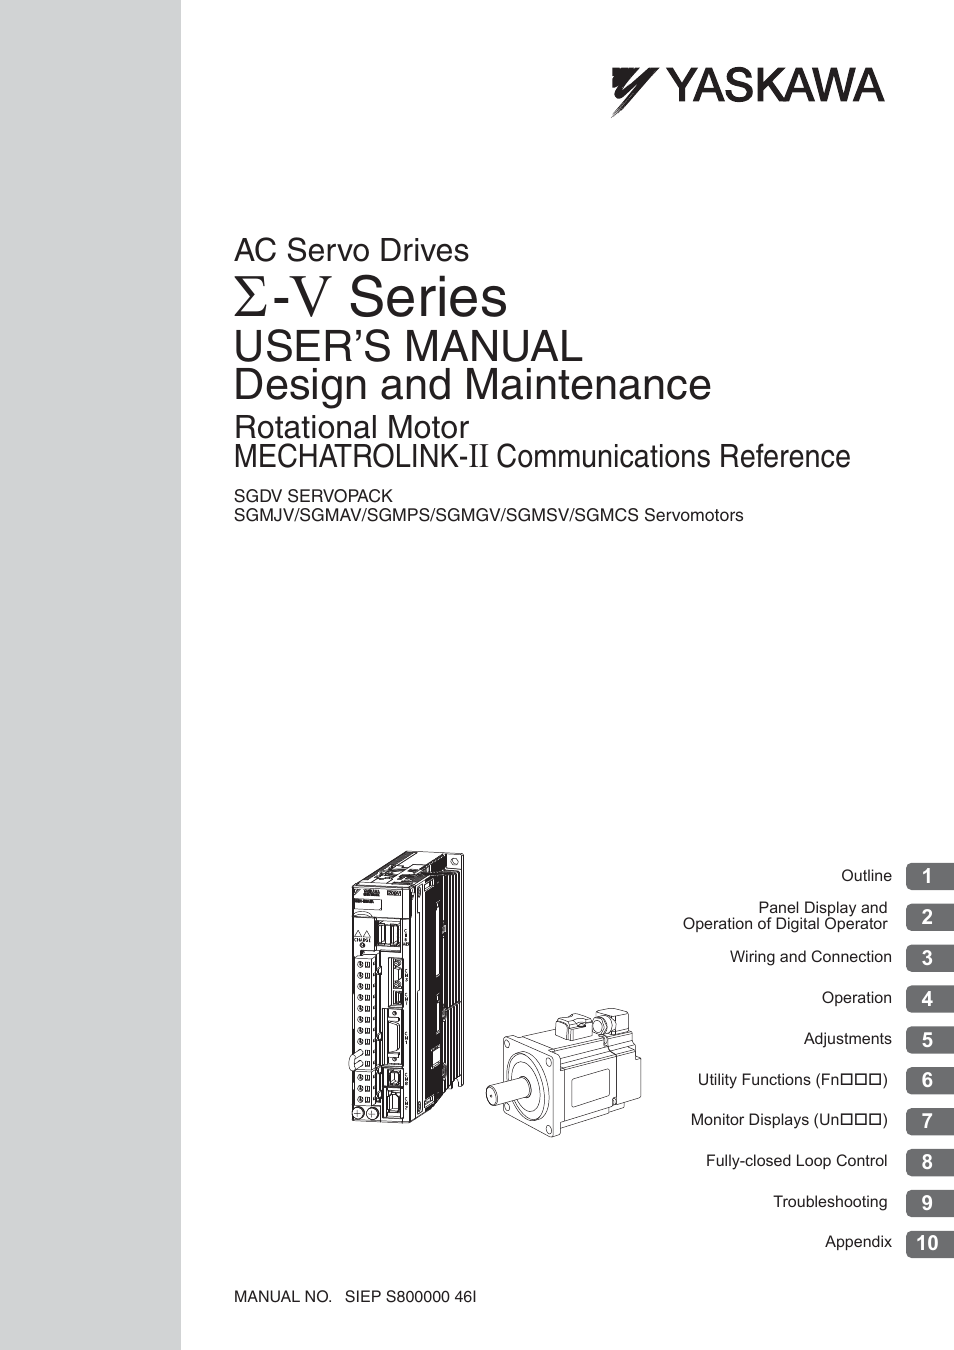 Yaskawa Sigma-5 User Manual: Design and Maintenance - Rotary Motors - MECHATROLINK-II Communications Reference User Manual | 376 pages